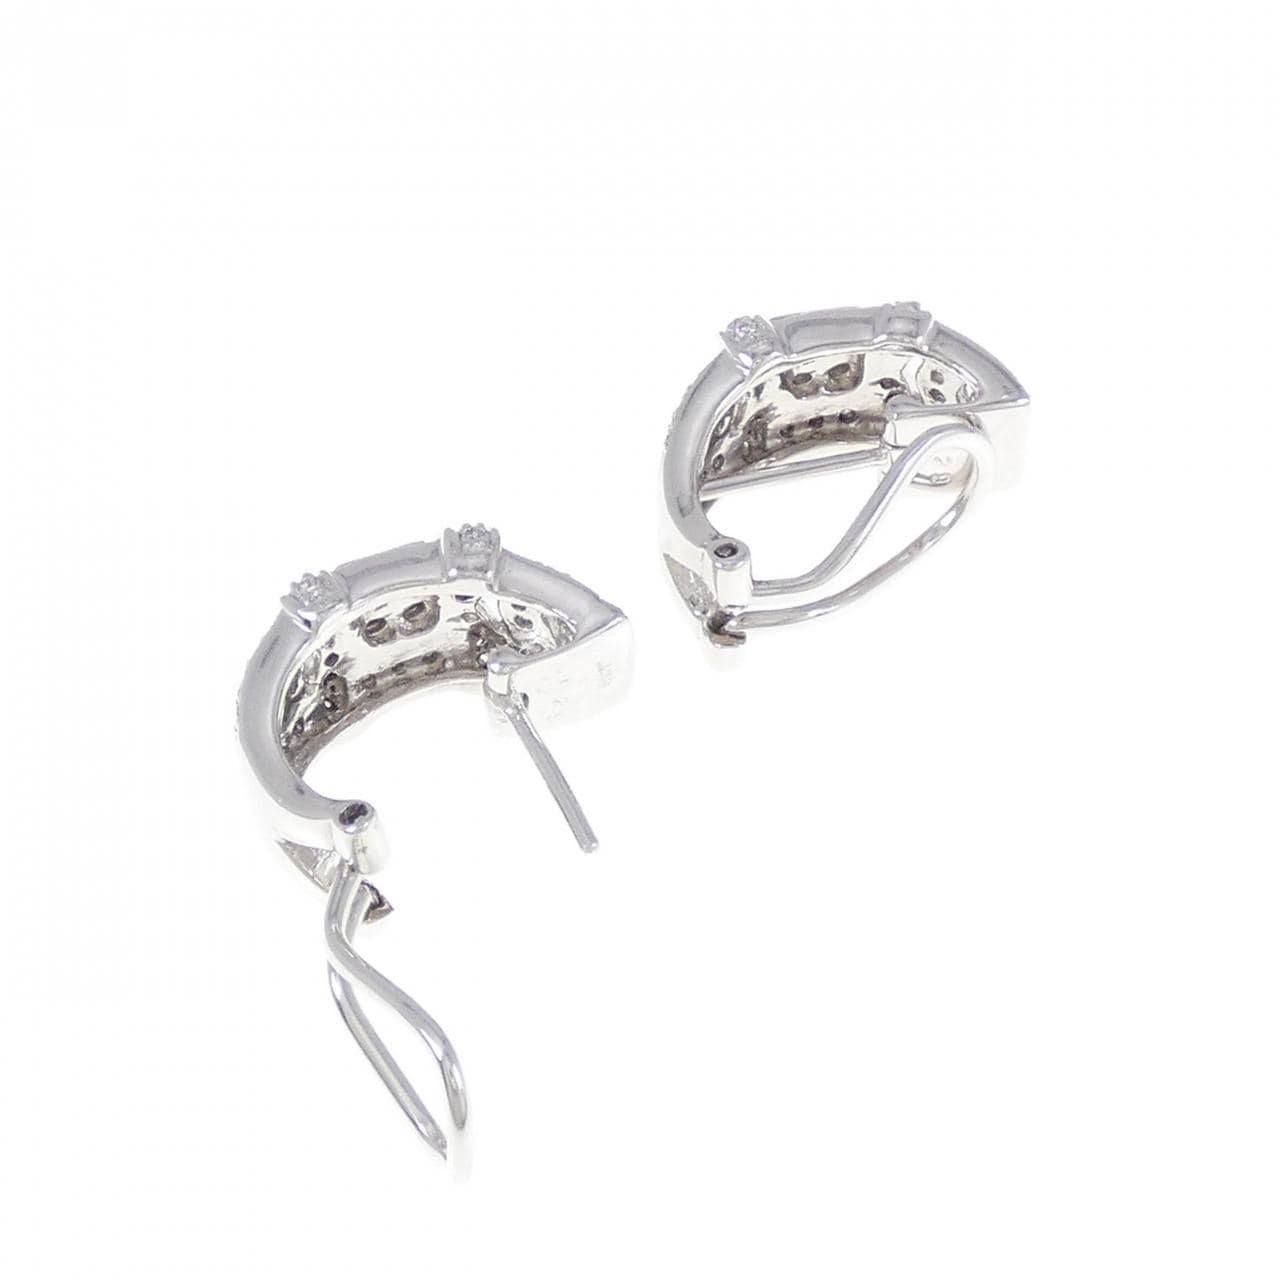 K18WG Diamond Earrings/Earrings 0.58CT